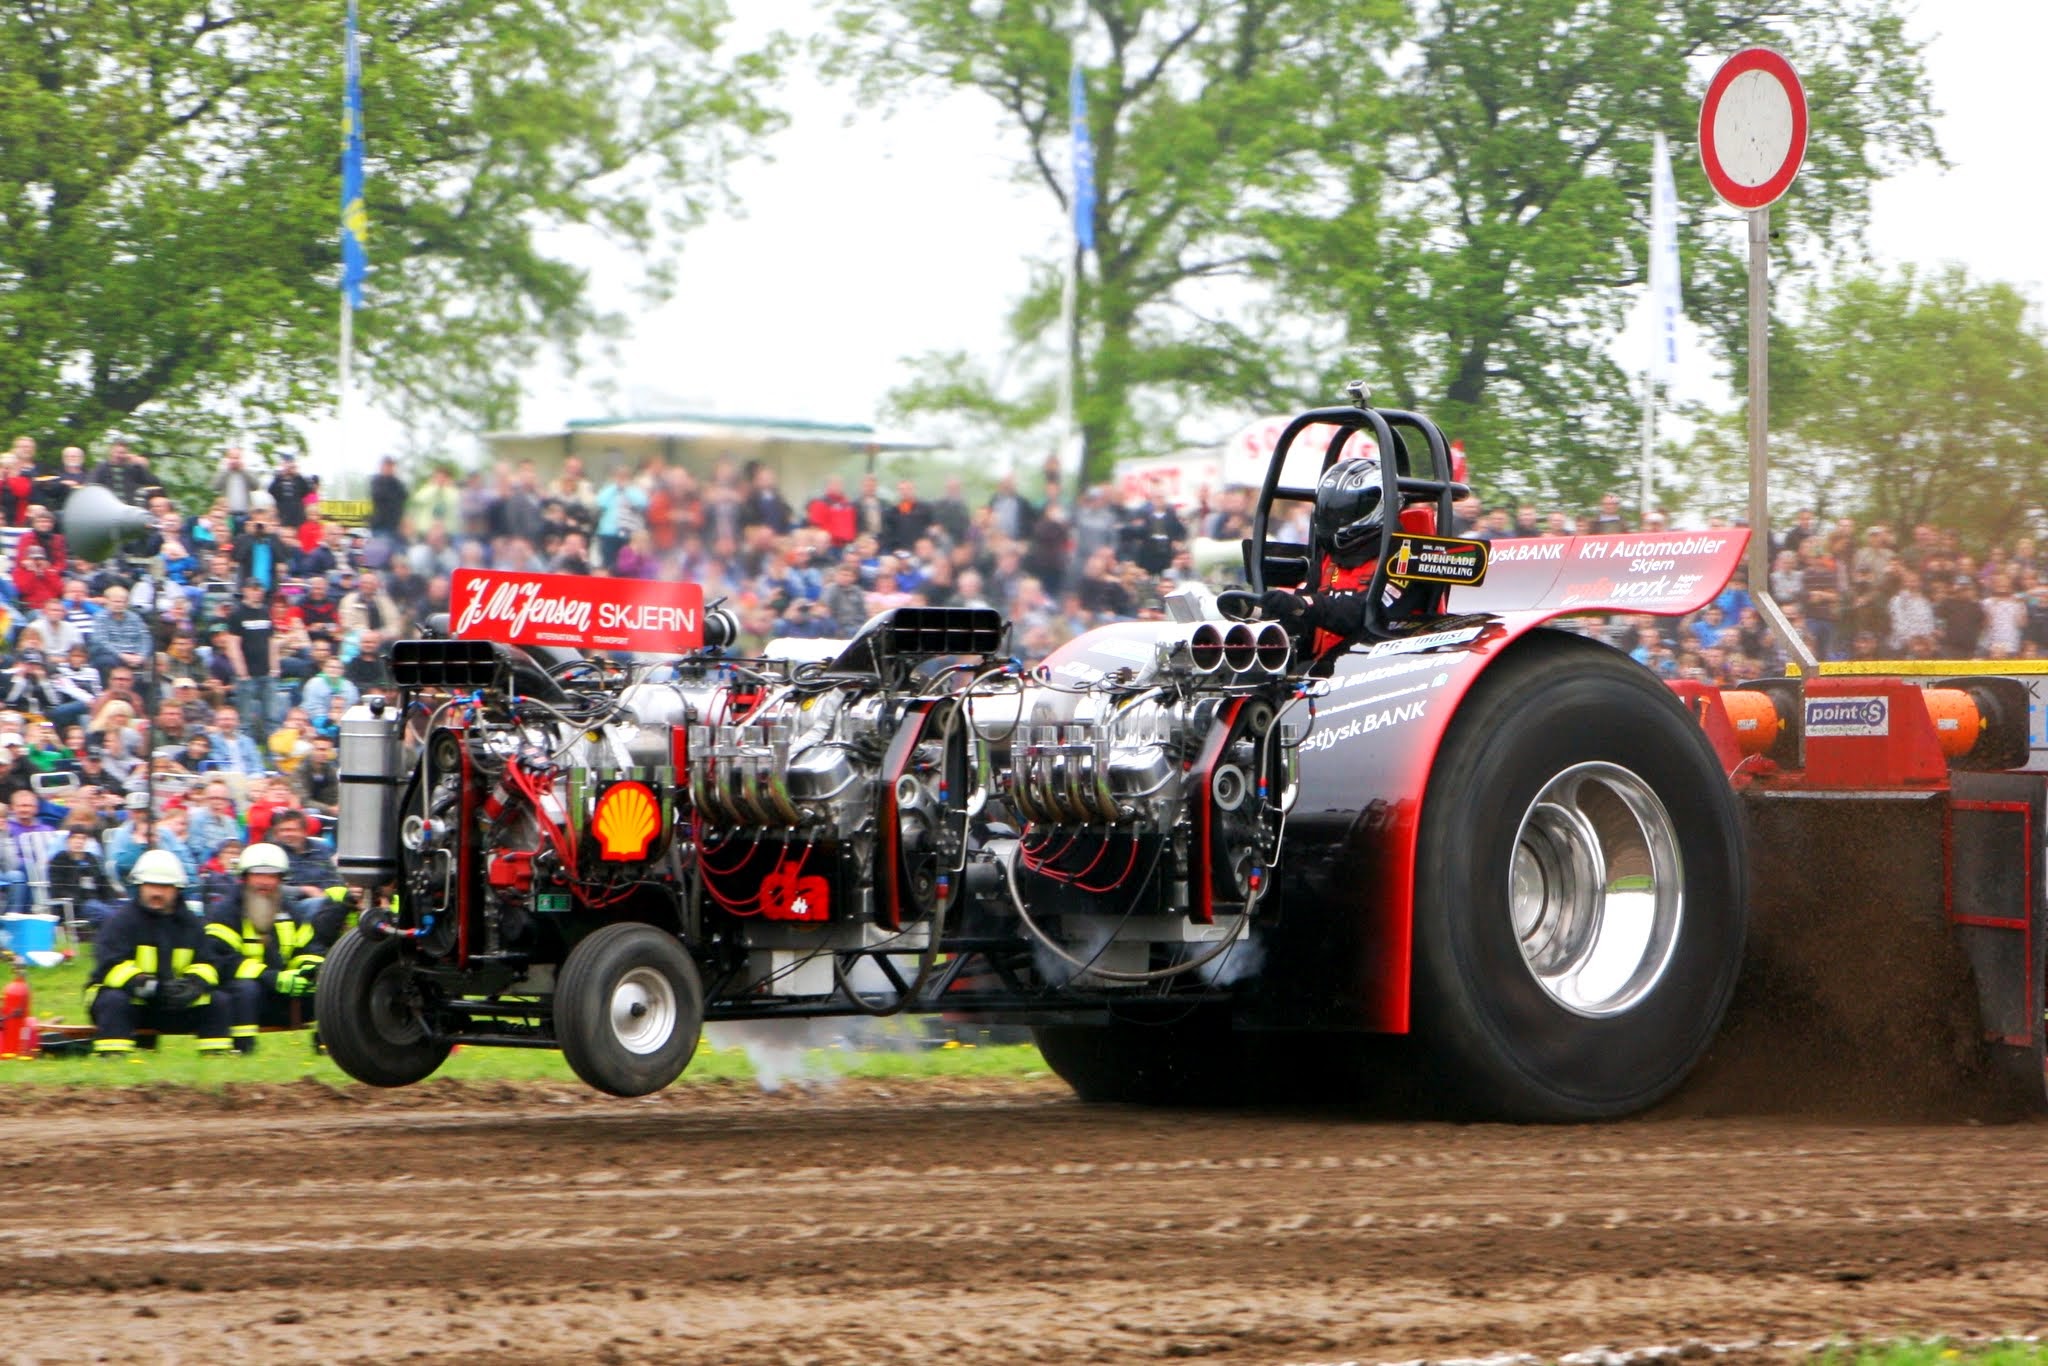  PULLING race racing hot rod rods tractor engine yu JPG wallpaper 2048x1366